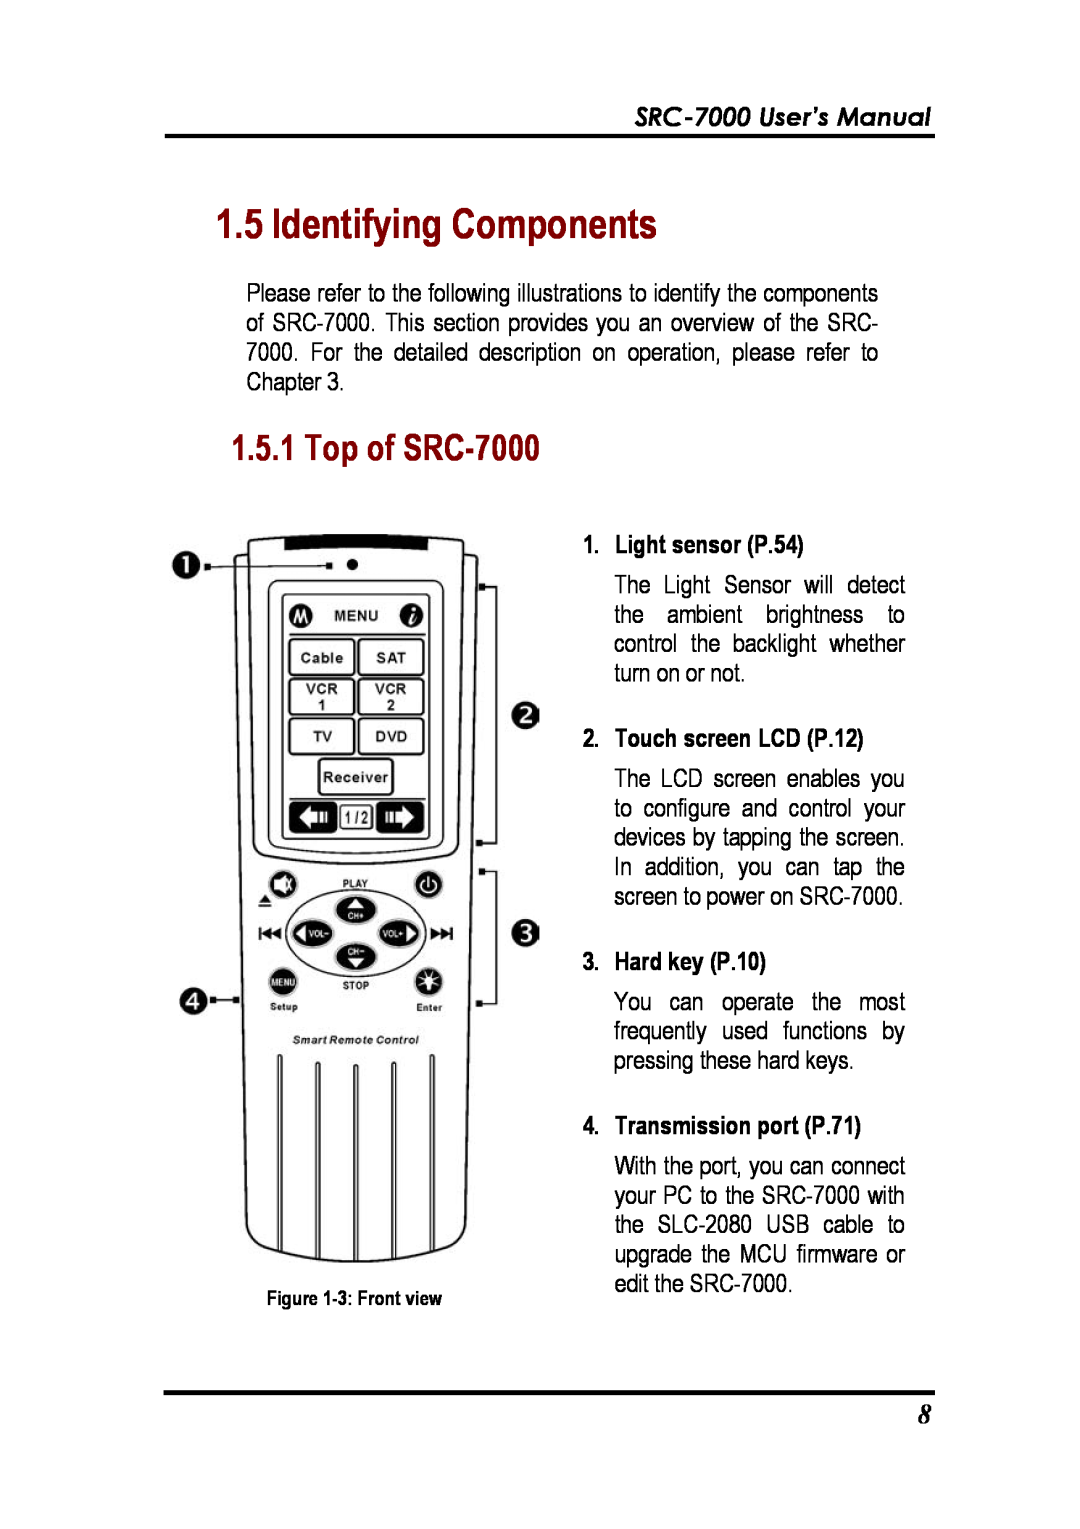 Sunwave Tech Identifying Components, Top of SRC-7000, SRC-7000 User’s Manual, Light sensor P.54, Touch screen LCD P.12 